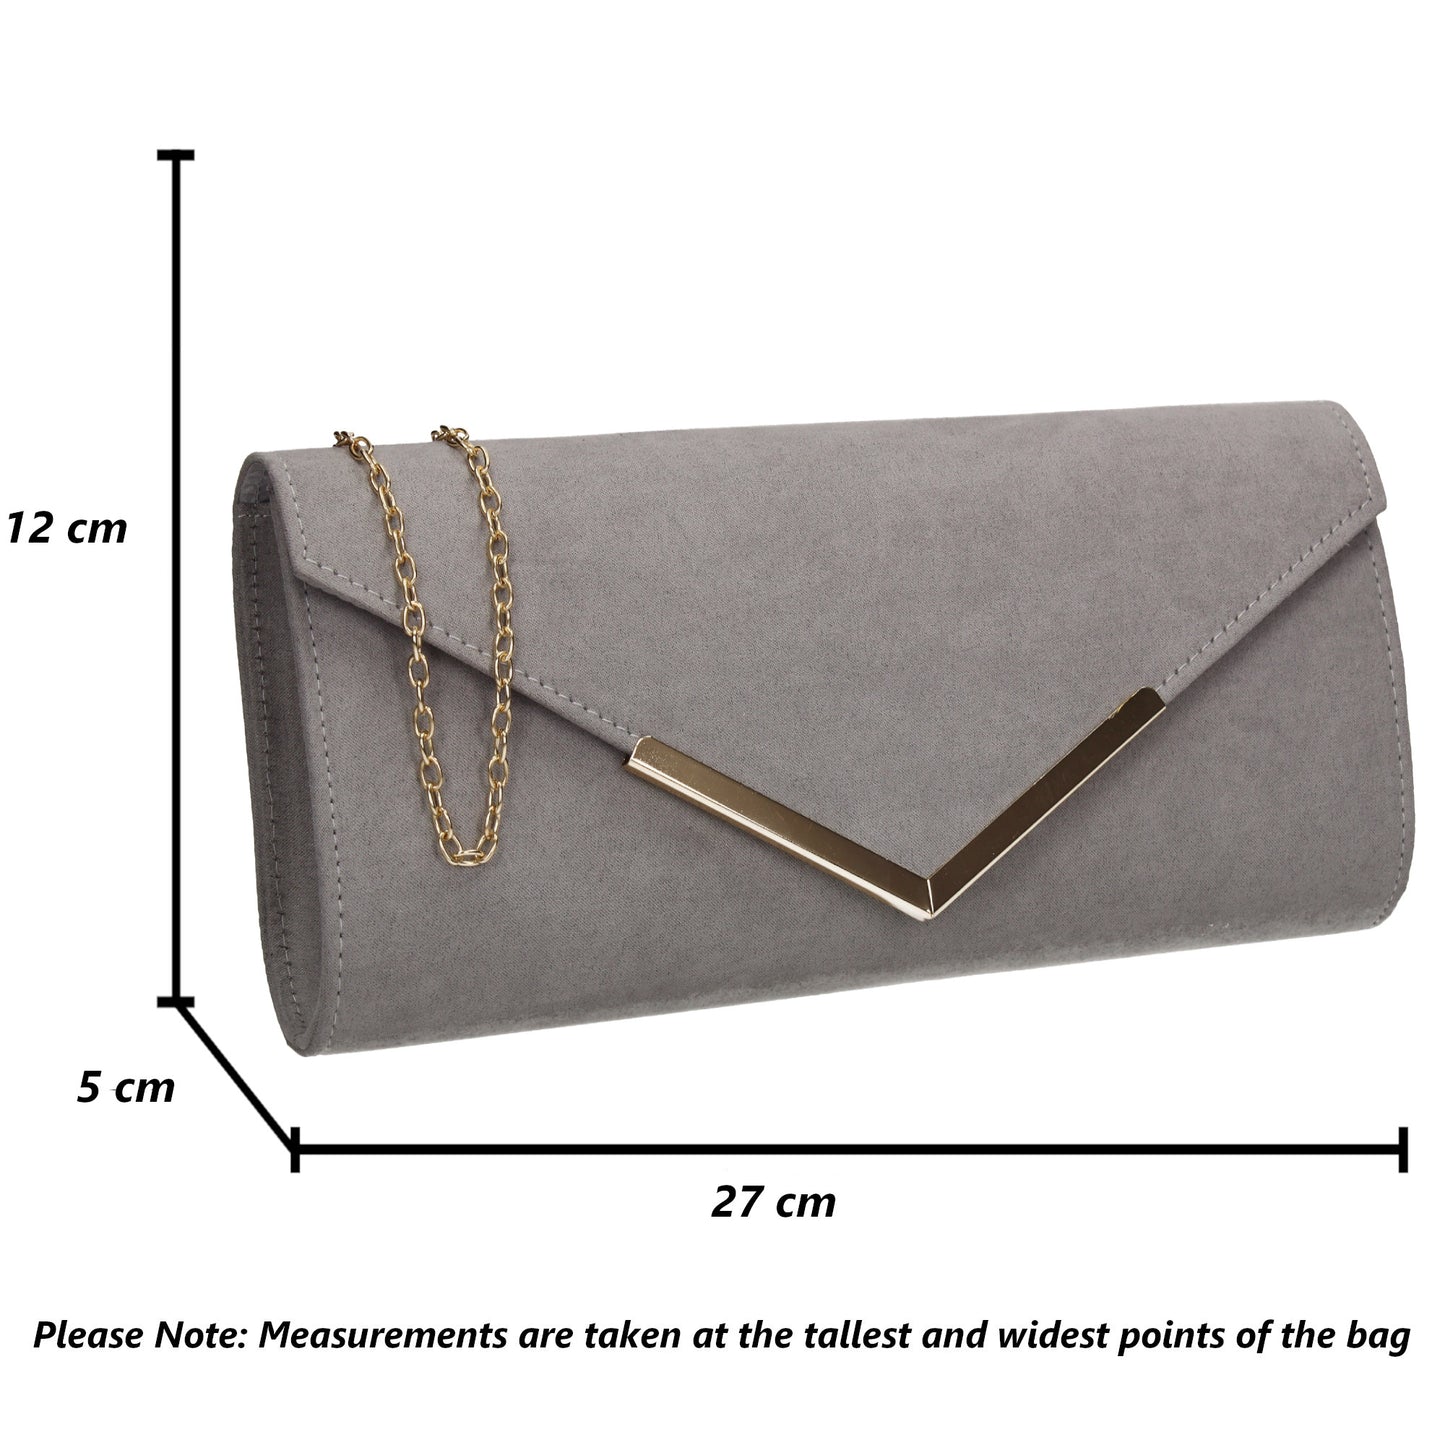 Leona Envelope Faux Suede Clutch Bag Grey